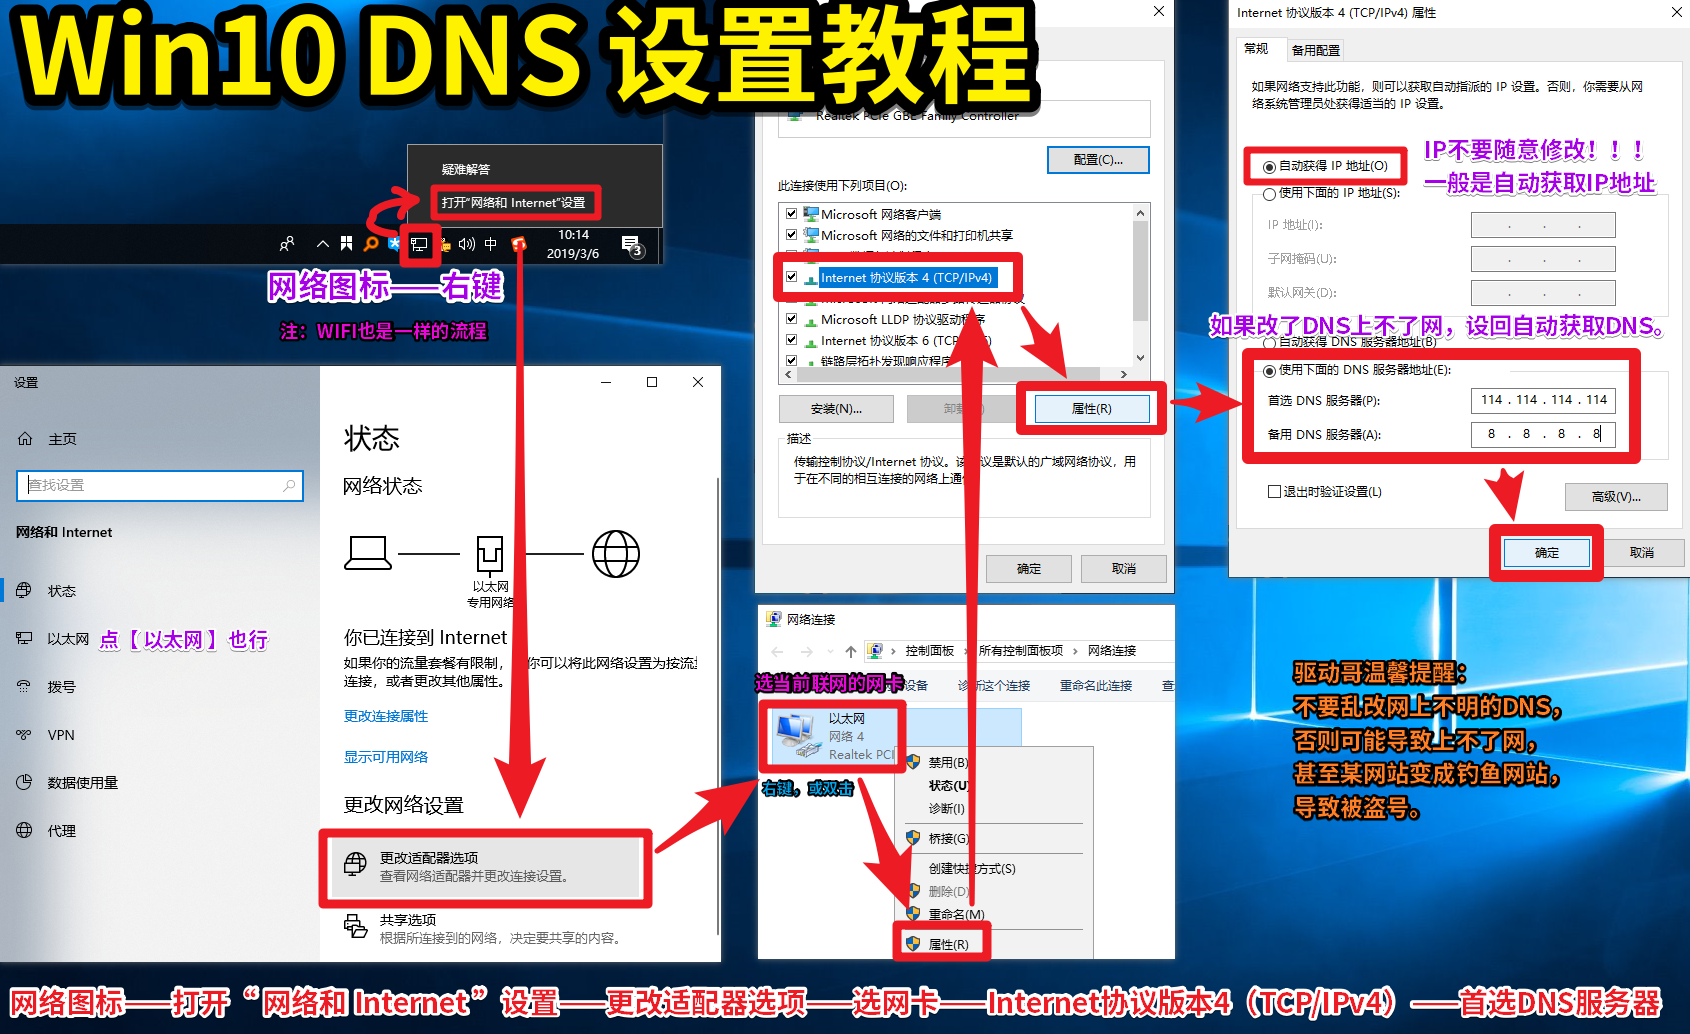 02 Win10 DNS设置教程 网络图标——打开“ 网络和 Internet ”设置——更改适配器选项——选网卡——Internet协议版本4（TCPIPv4）——首选DNS服务器.png